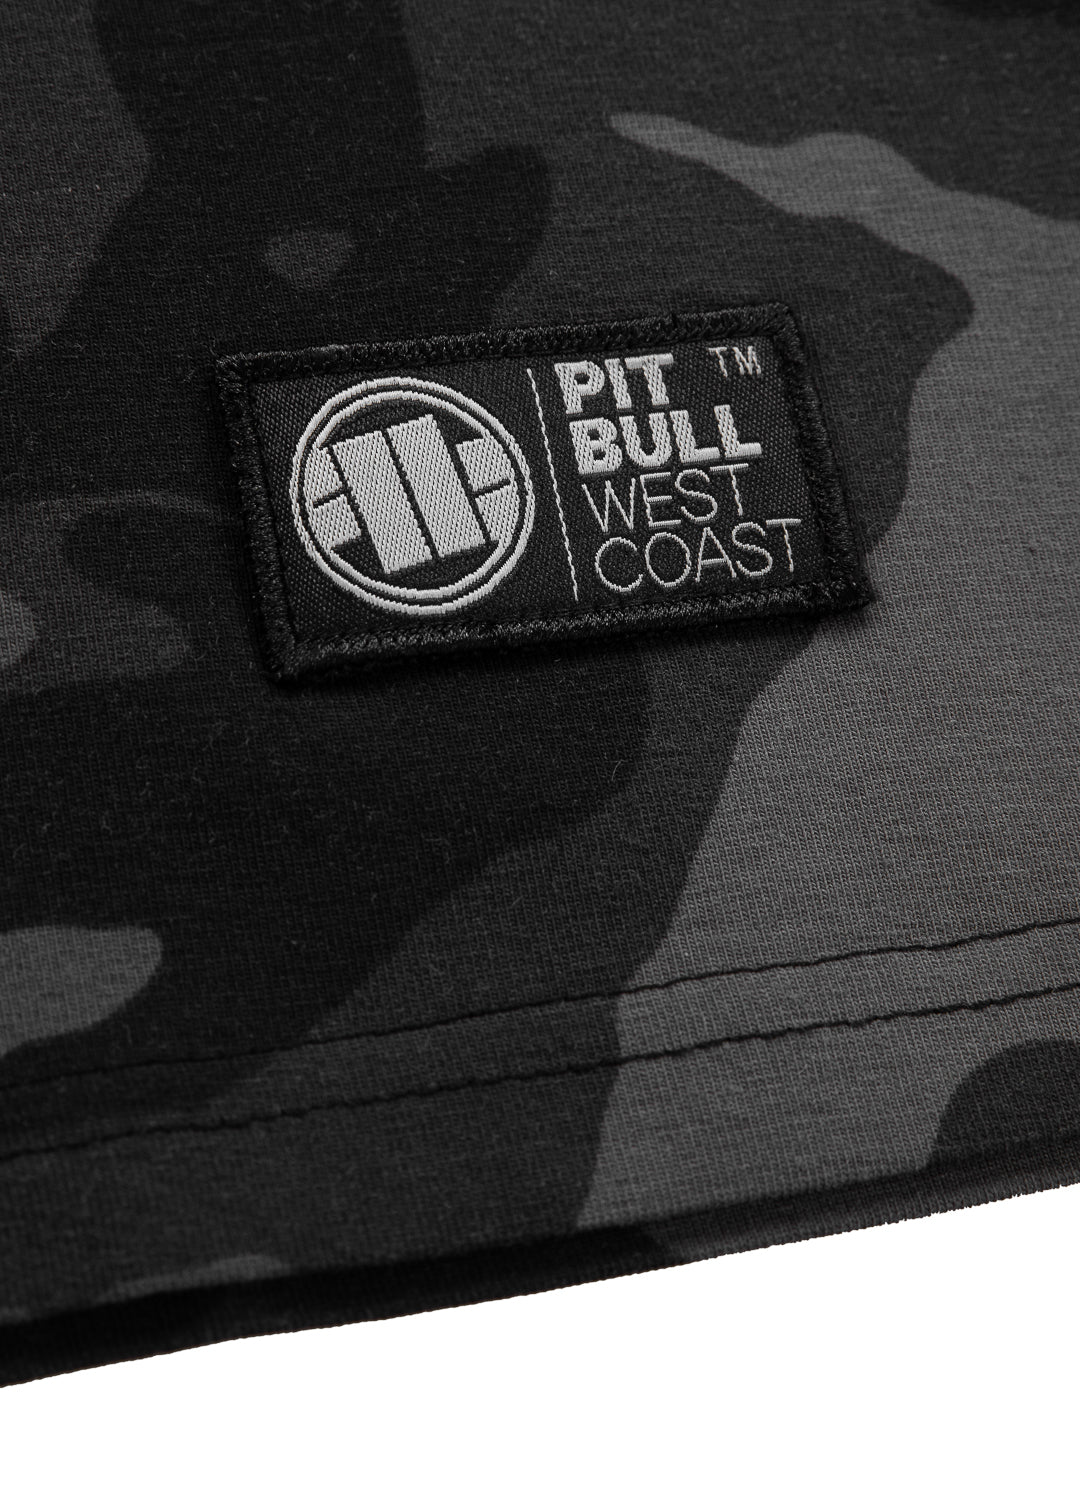 Small Logo Slim Fit All Black Camo Tank Top.